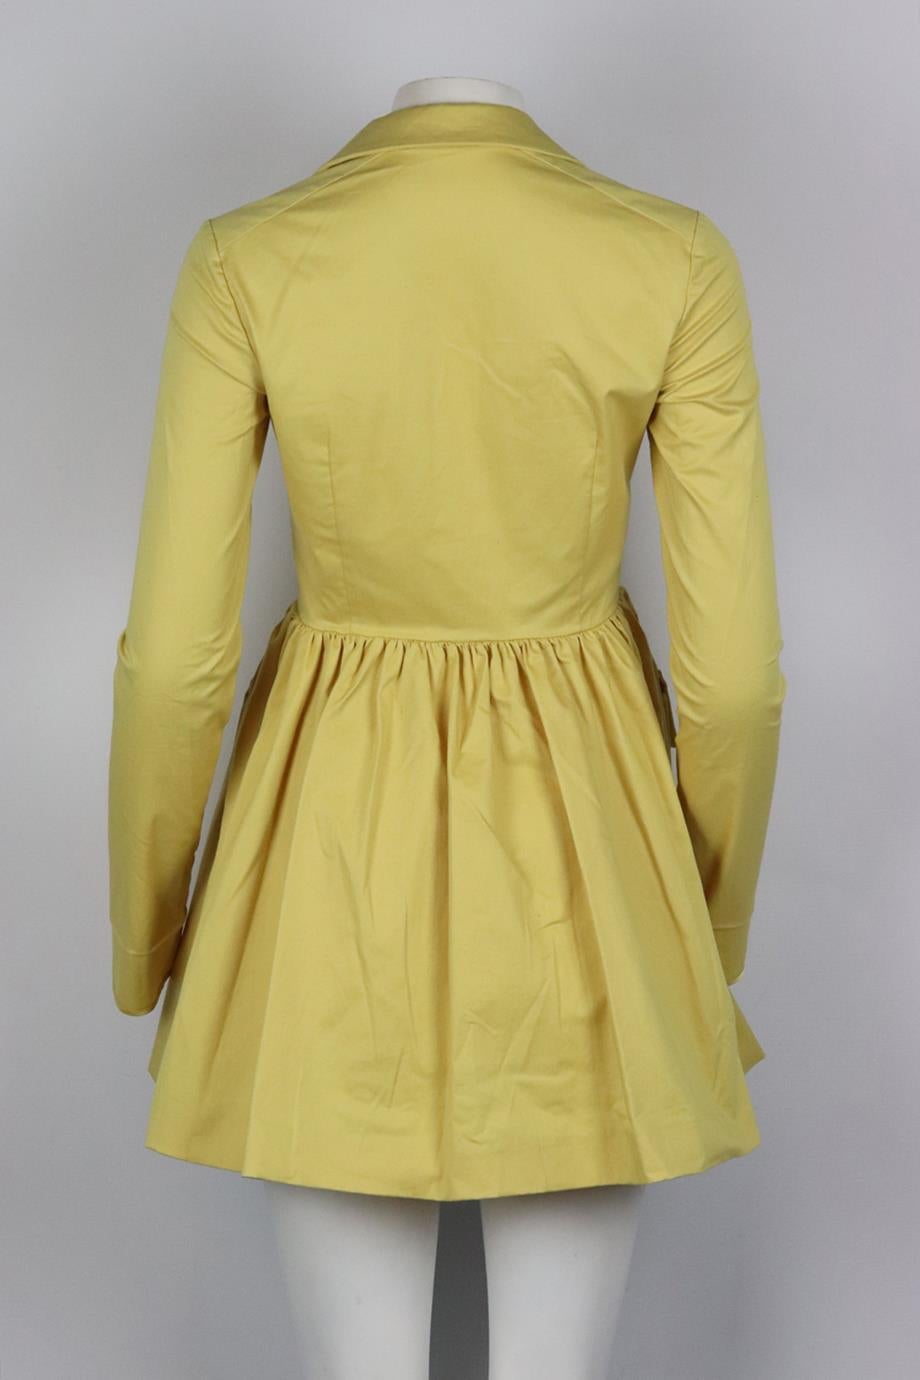 Miu Miu Cotton Blend Mini Dress It 40 Uk 8 In Excellent Condition In London, GB